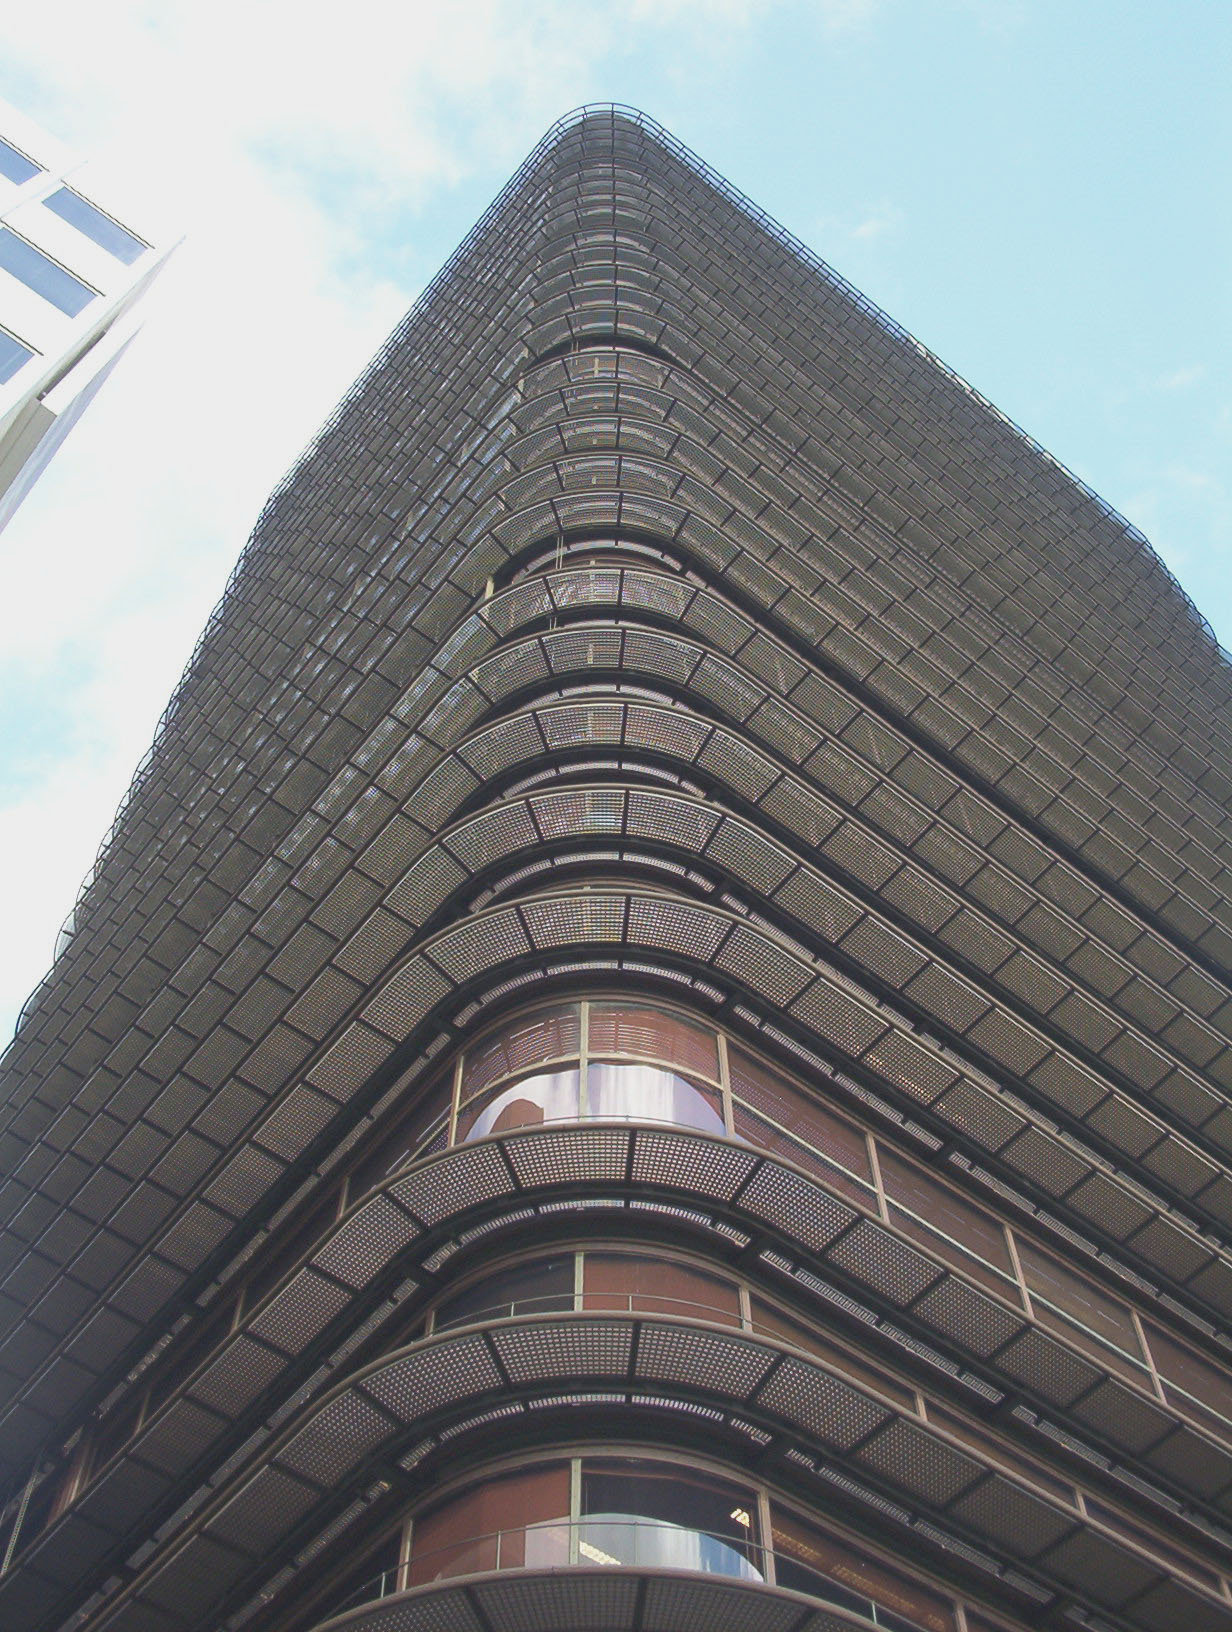 Façade of the BBVA Tower (Madrid, Spain, 1979–1981). Architect: Francisco Javier Sáenz de Oiza (1918–2000).